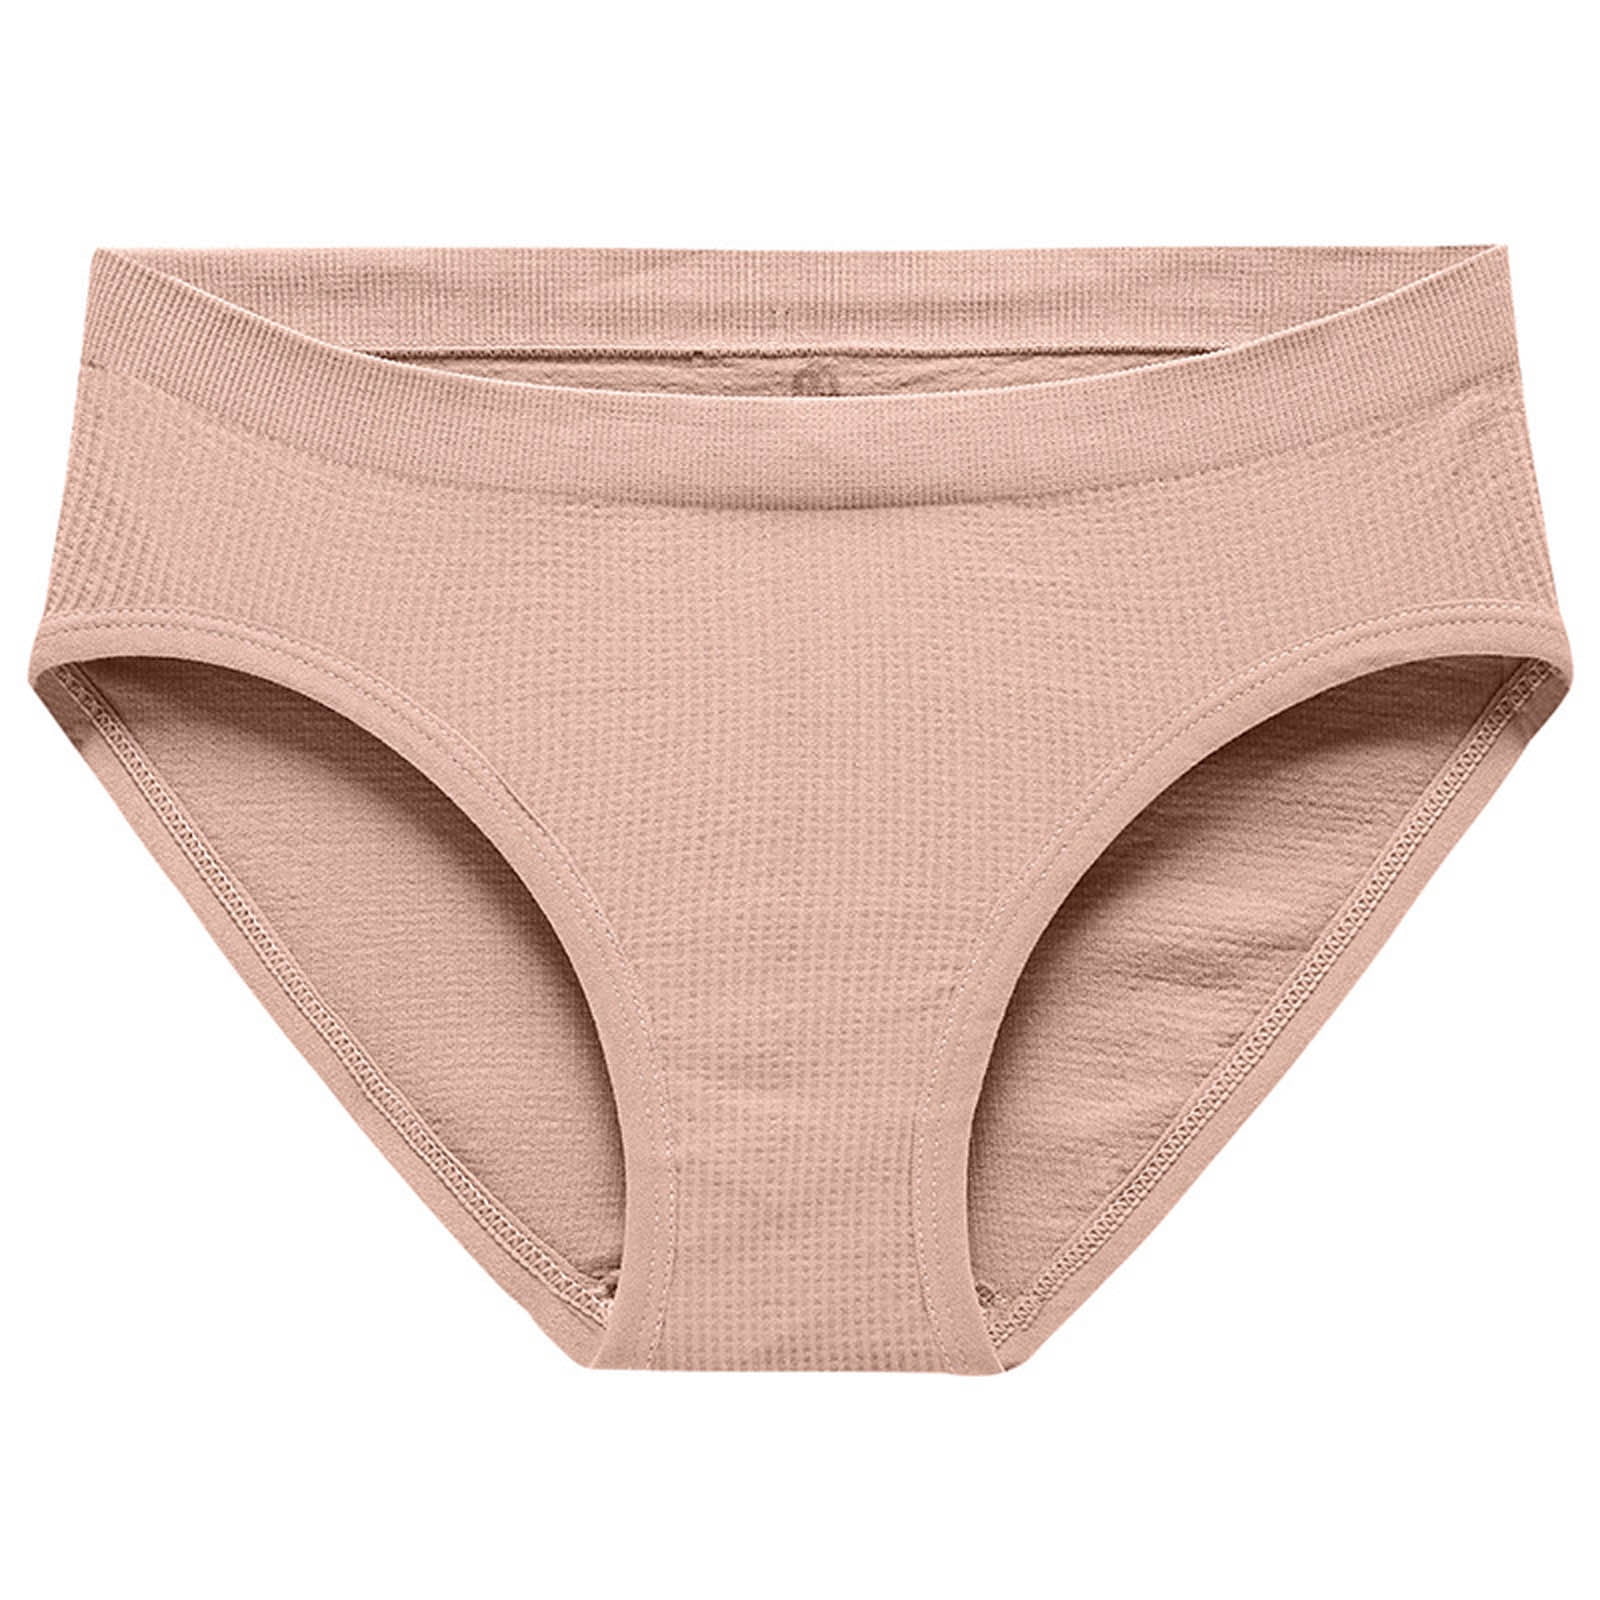 ZMHEGW Period Underwear For Women Seamless Bikini Lace Half Back